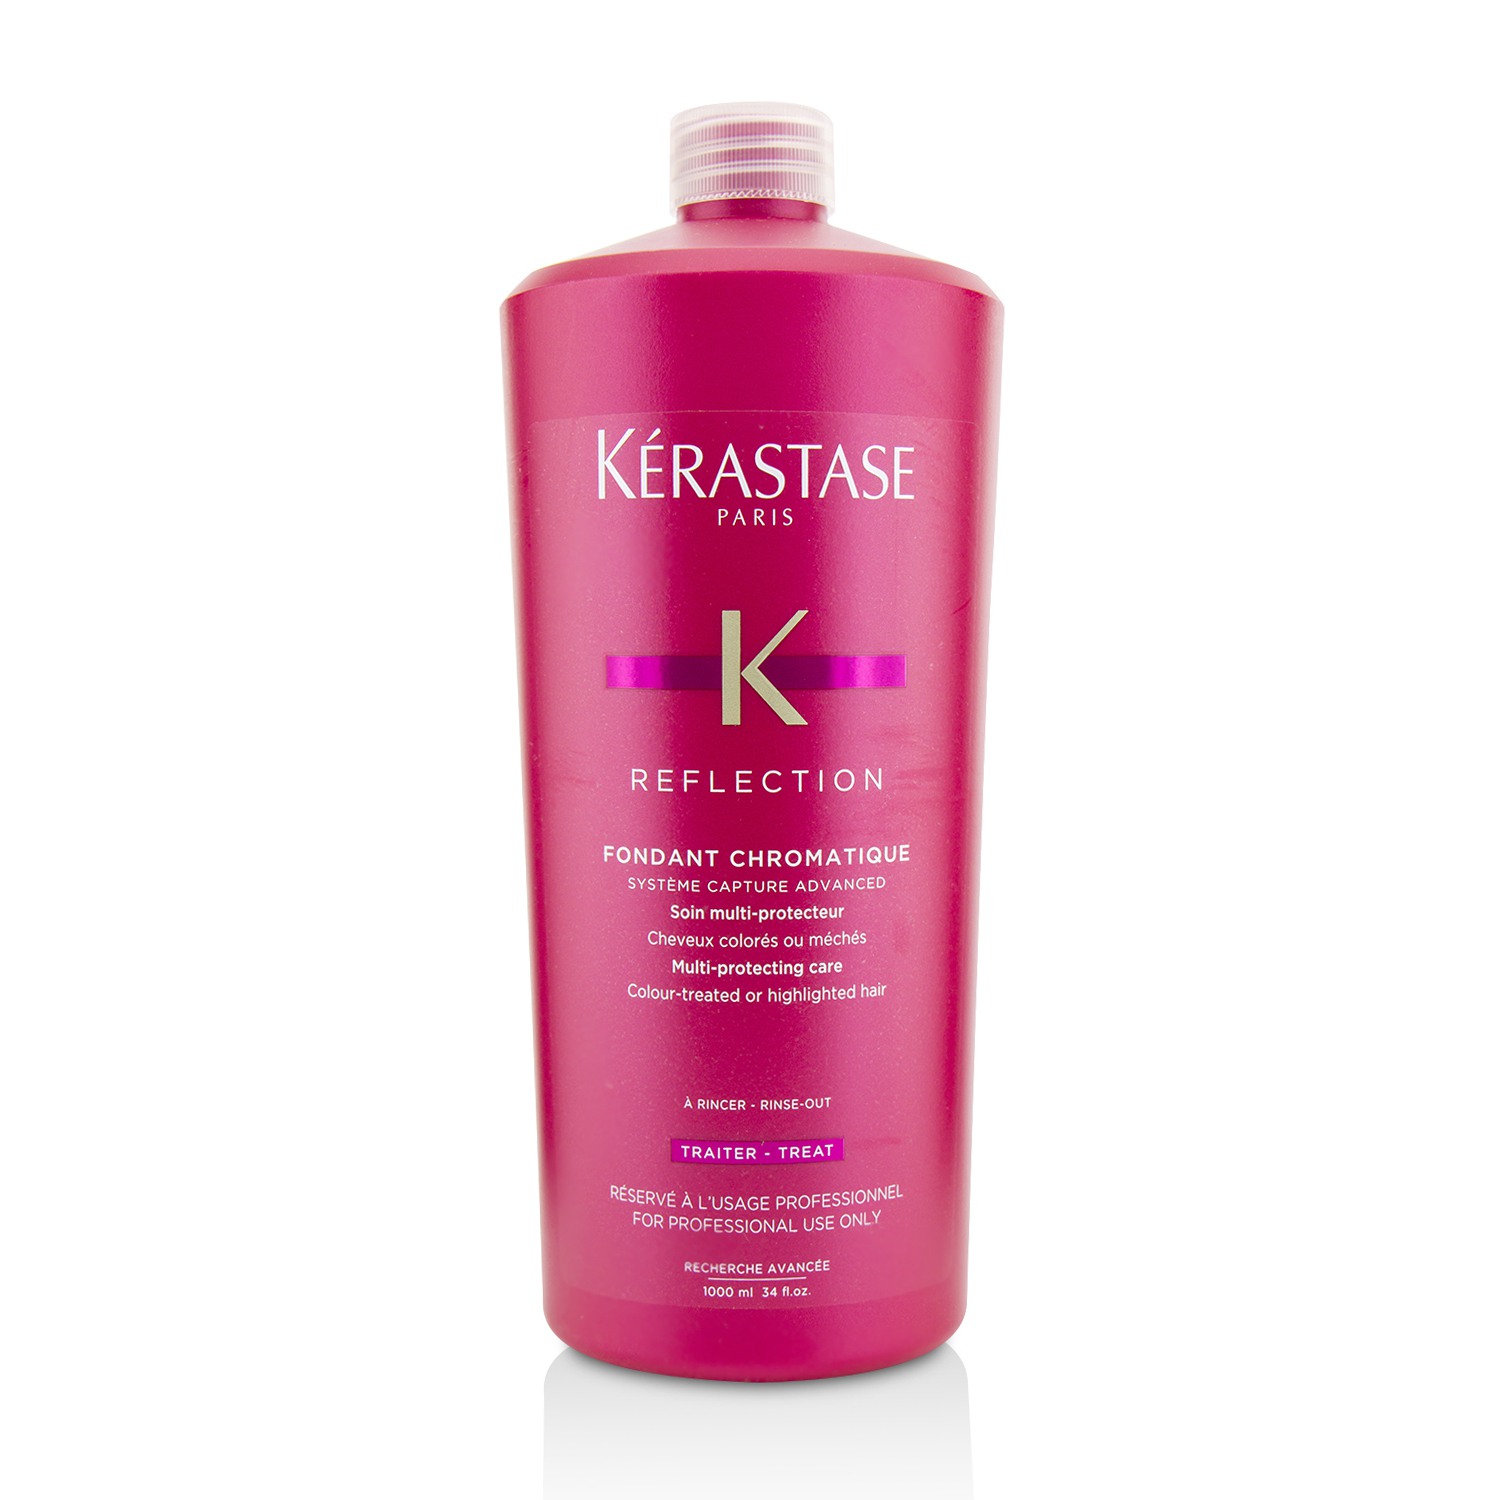 Reflection Fondant Chromatique Multi-Protecting Care (Colour-Treated or Highlighted Hair) Kerastase Image